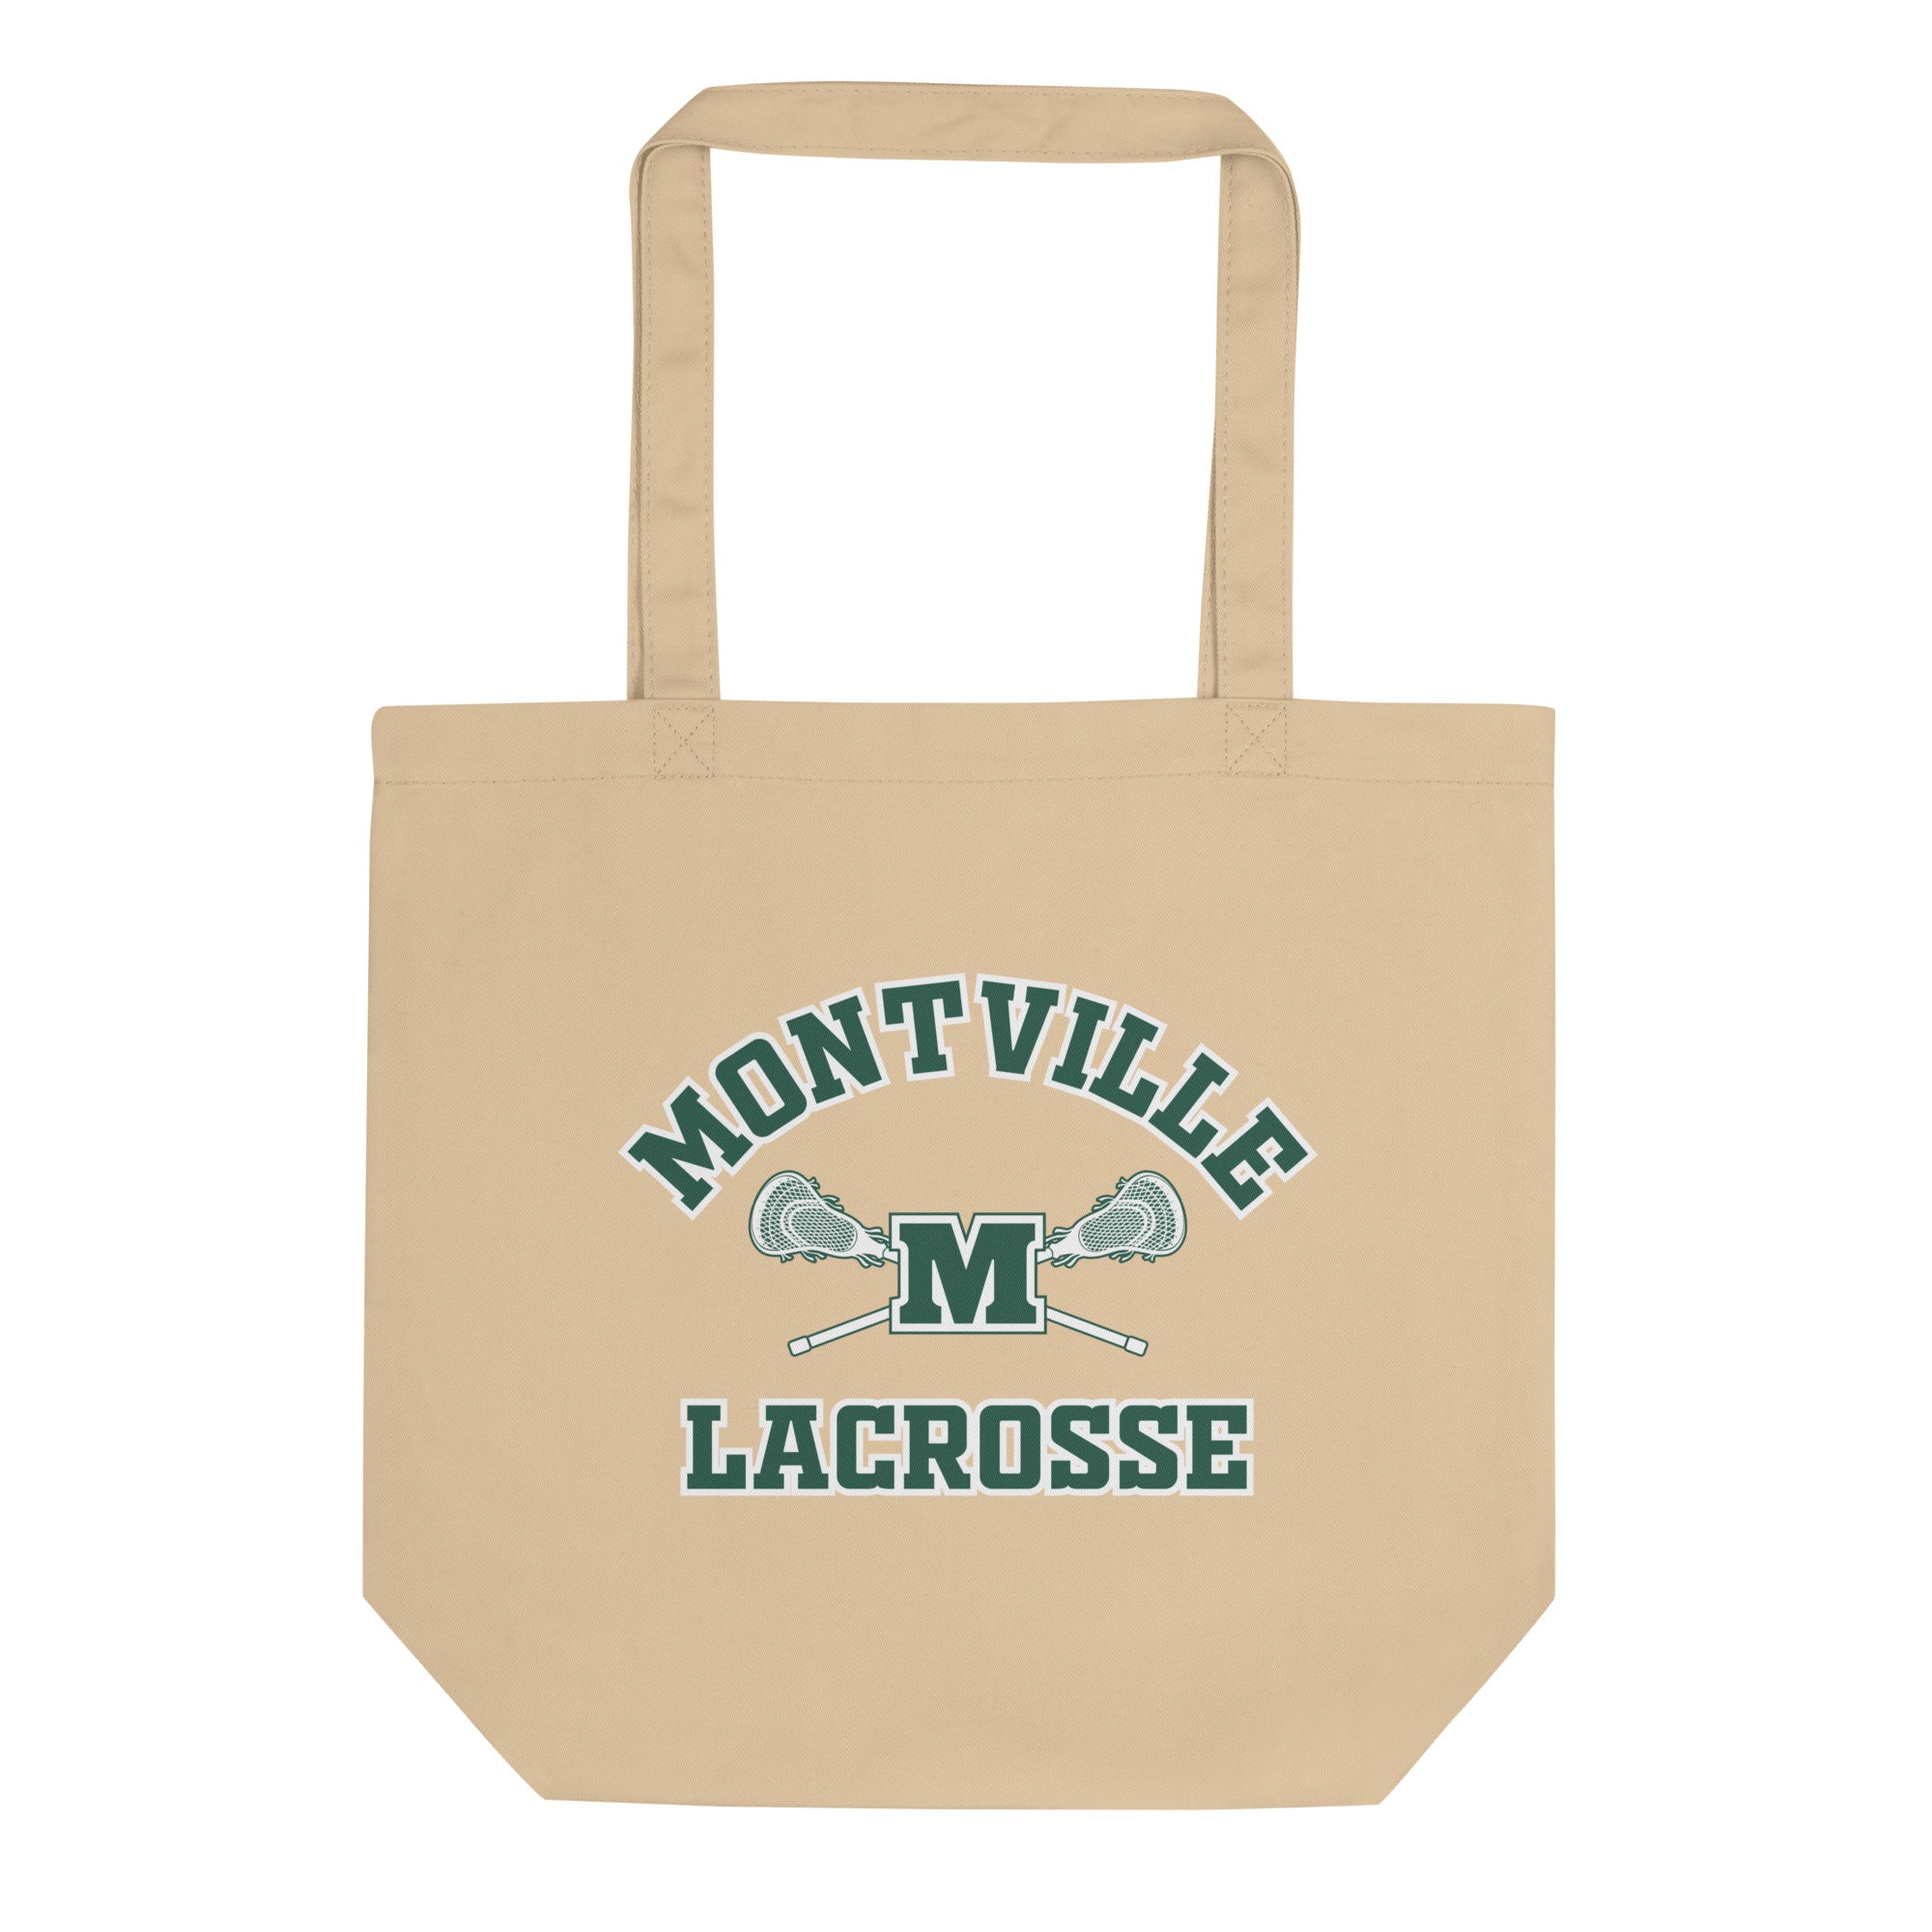 Montville Eco Tote Bag